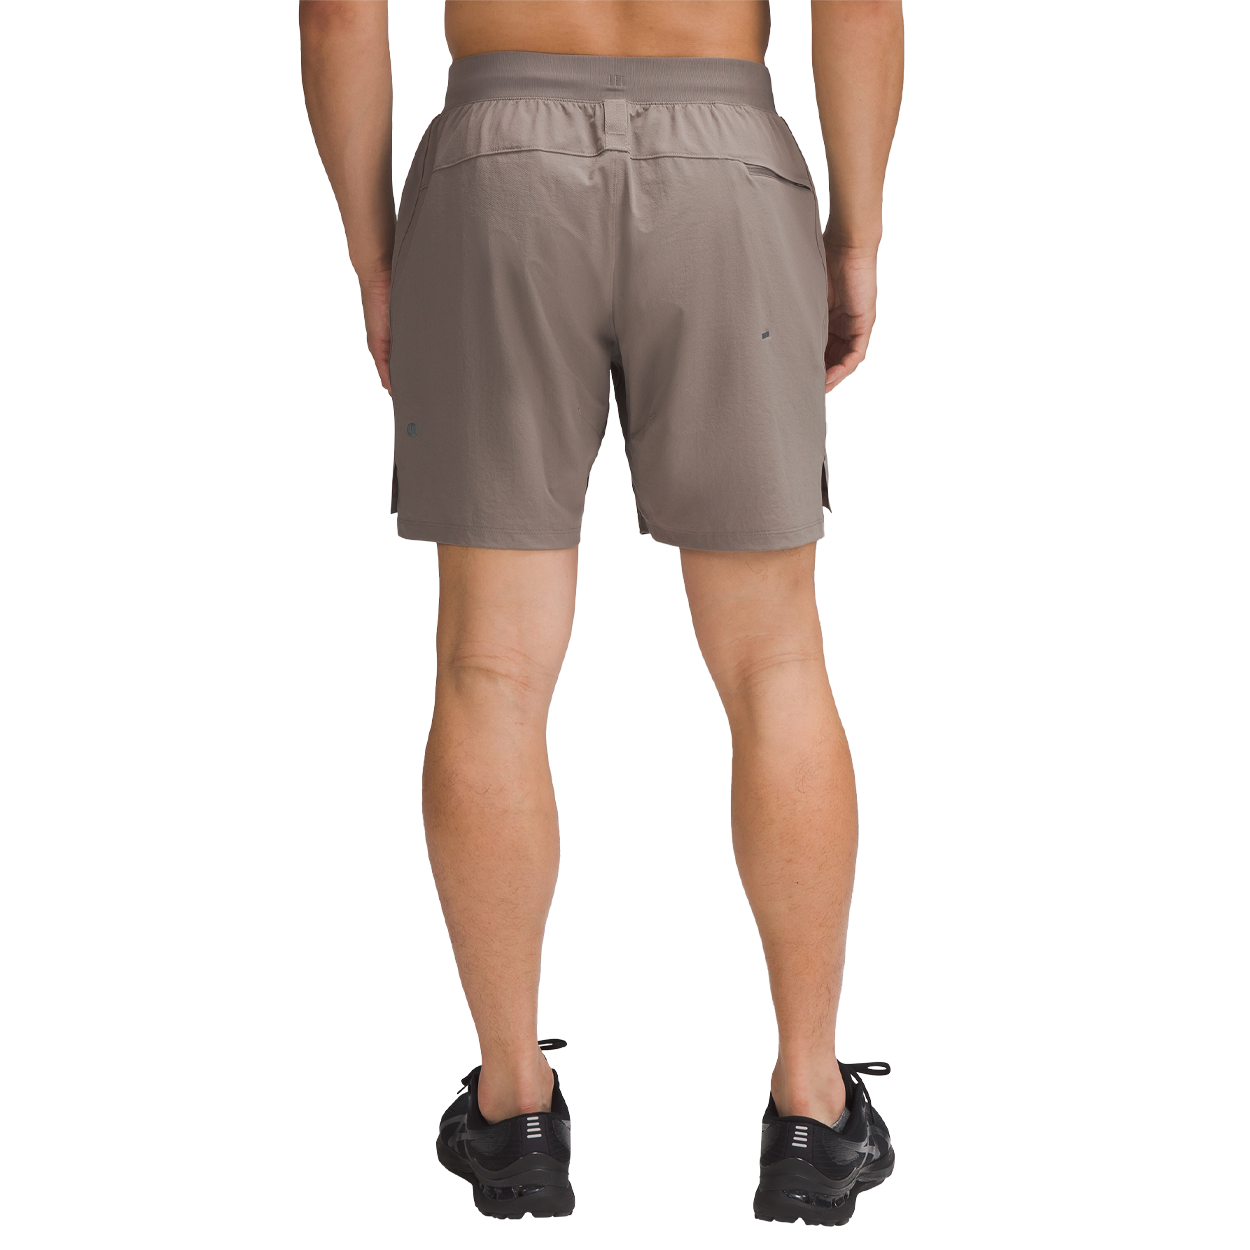 EUC Lululemon Shorts with compression liner